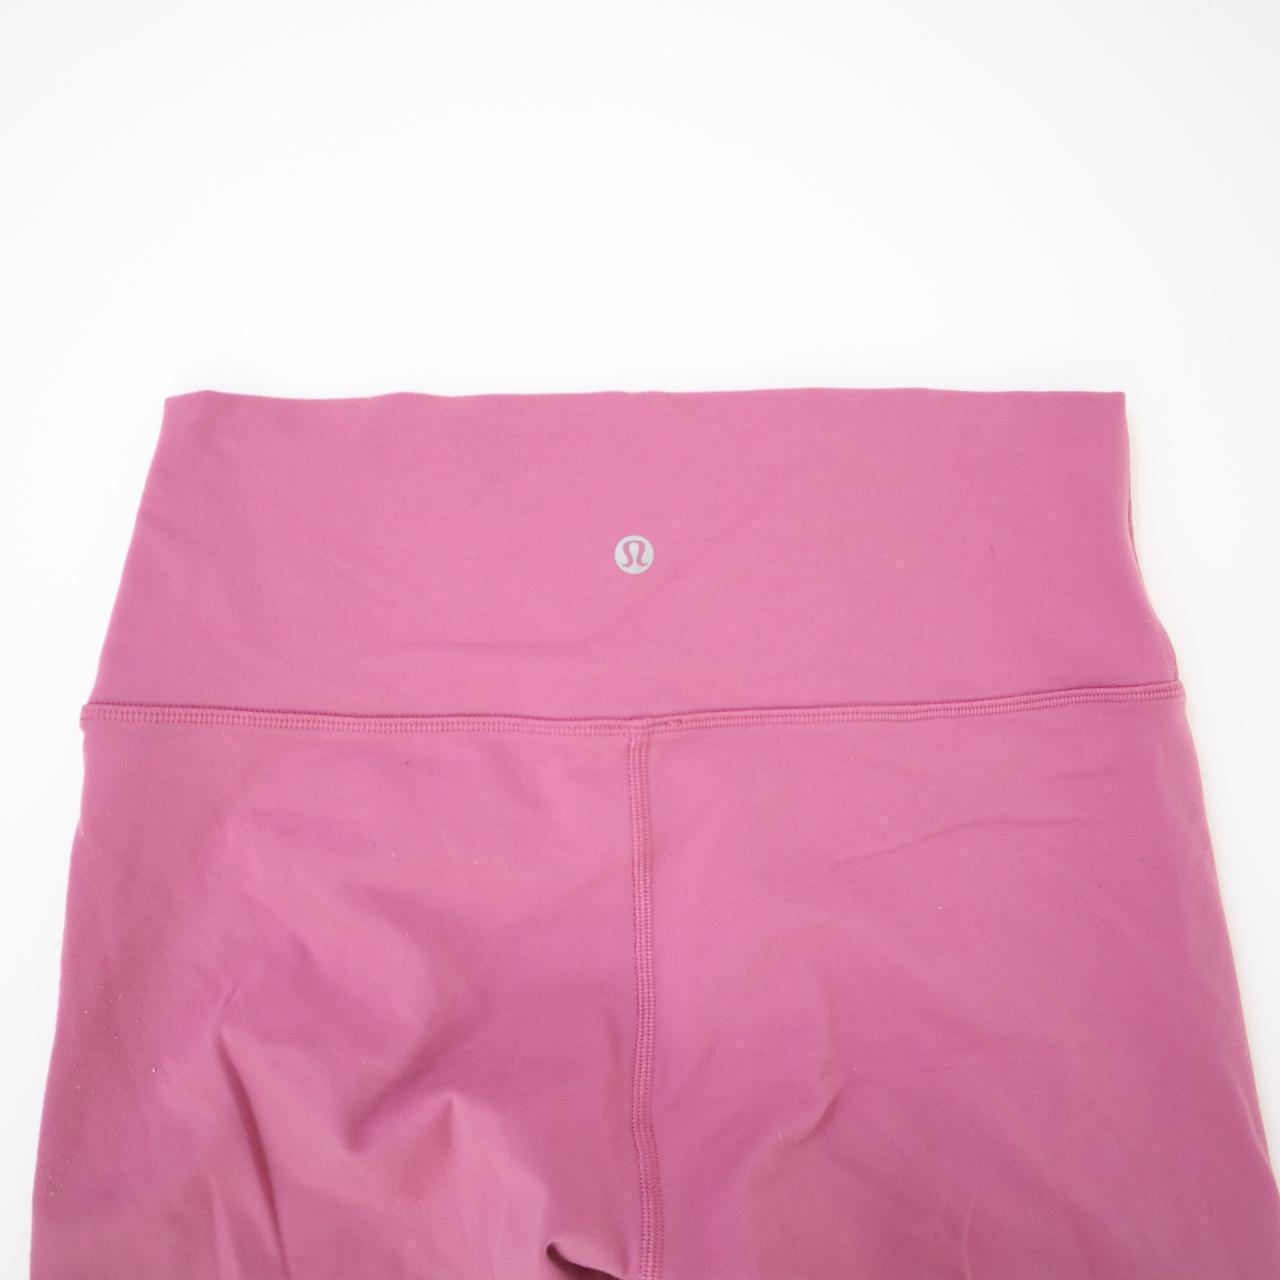 Product Image 4 - Pink lululemon leggings
Cute pink SHORT